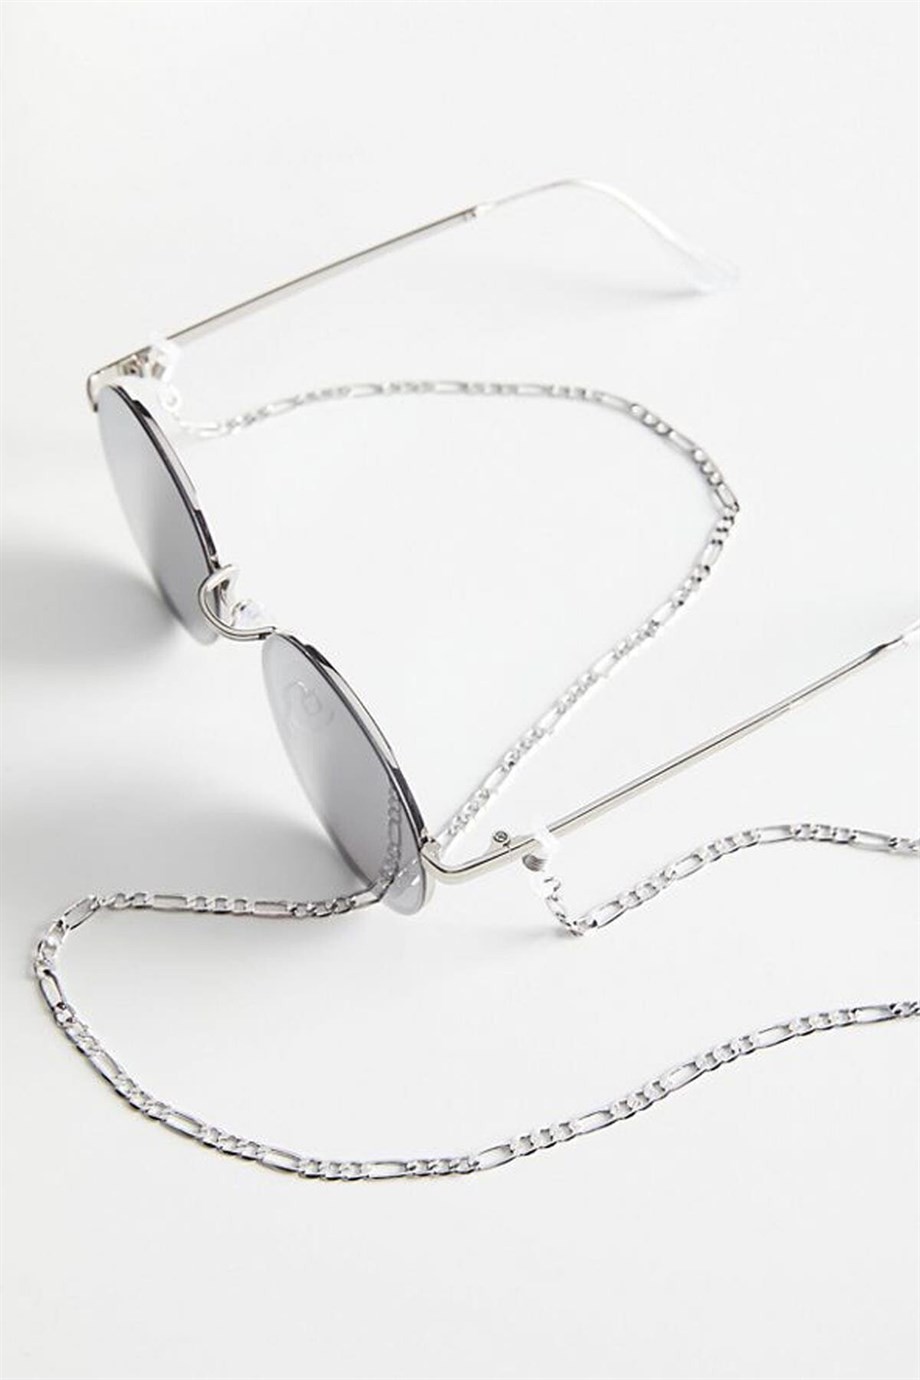 Unisex Figaro model silver color glasses chain glasses rope